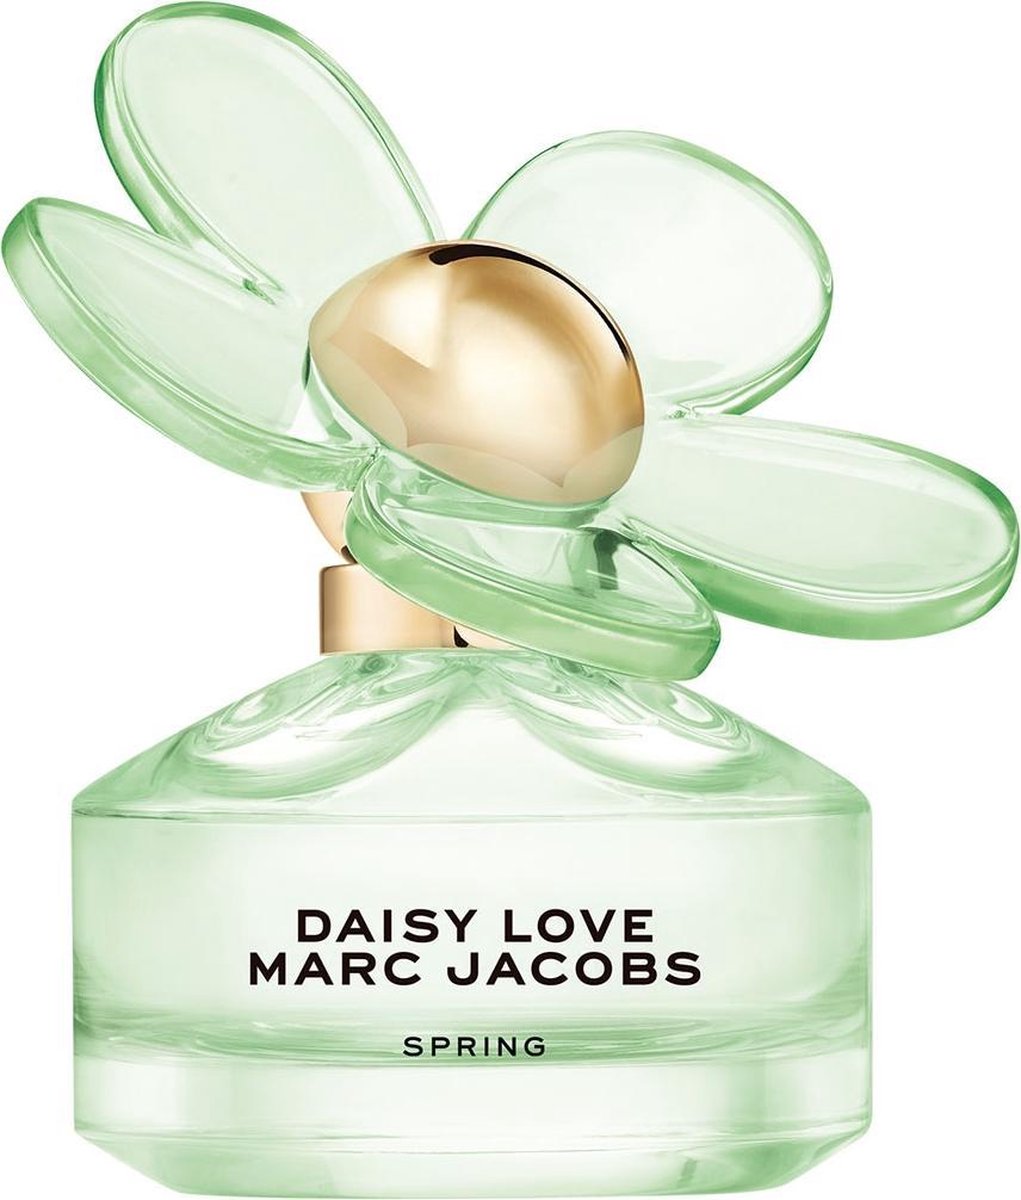 Marc Jacobs Daisy Spring Love Eau de toilette spray 50 ml